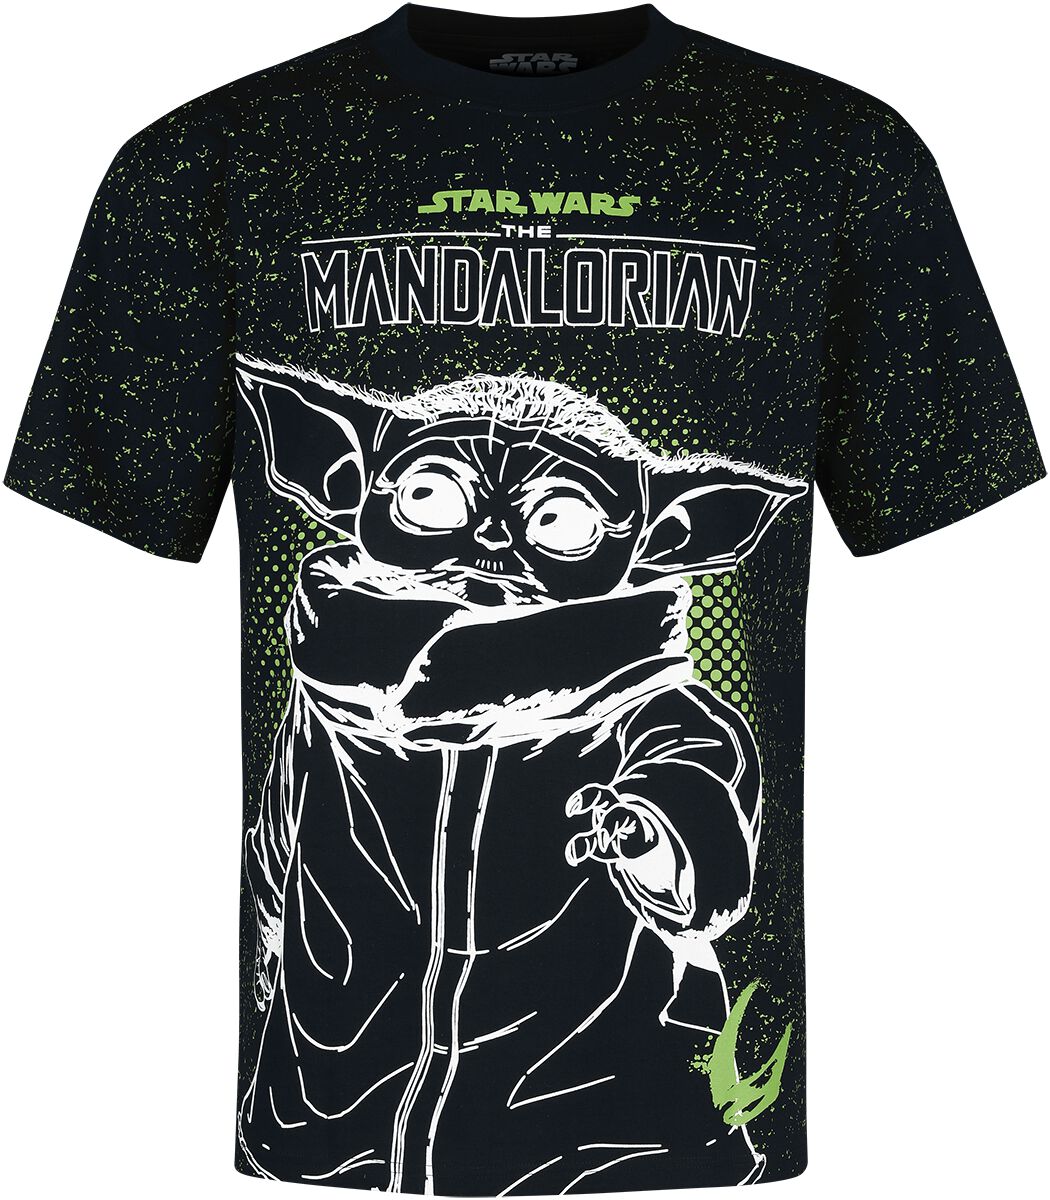 Star Wars The Mandalorian - Grogu T-Shirt multicolor in S